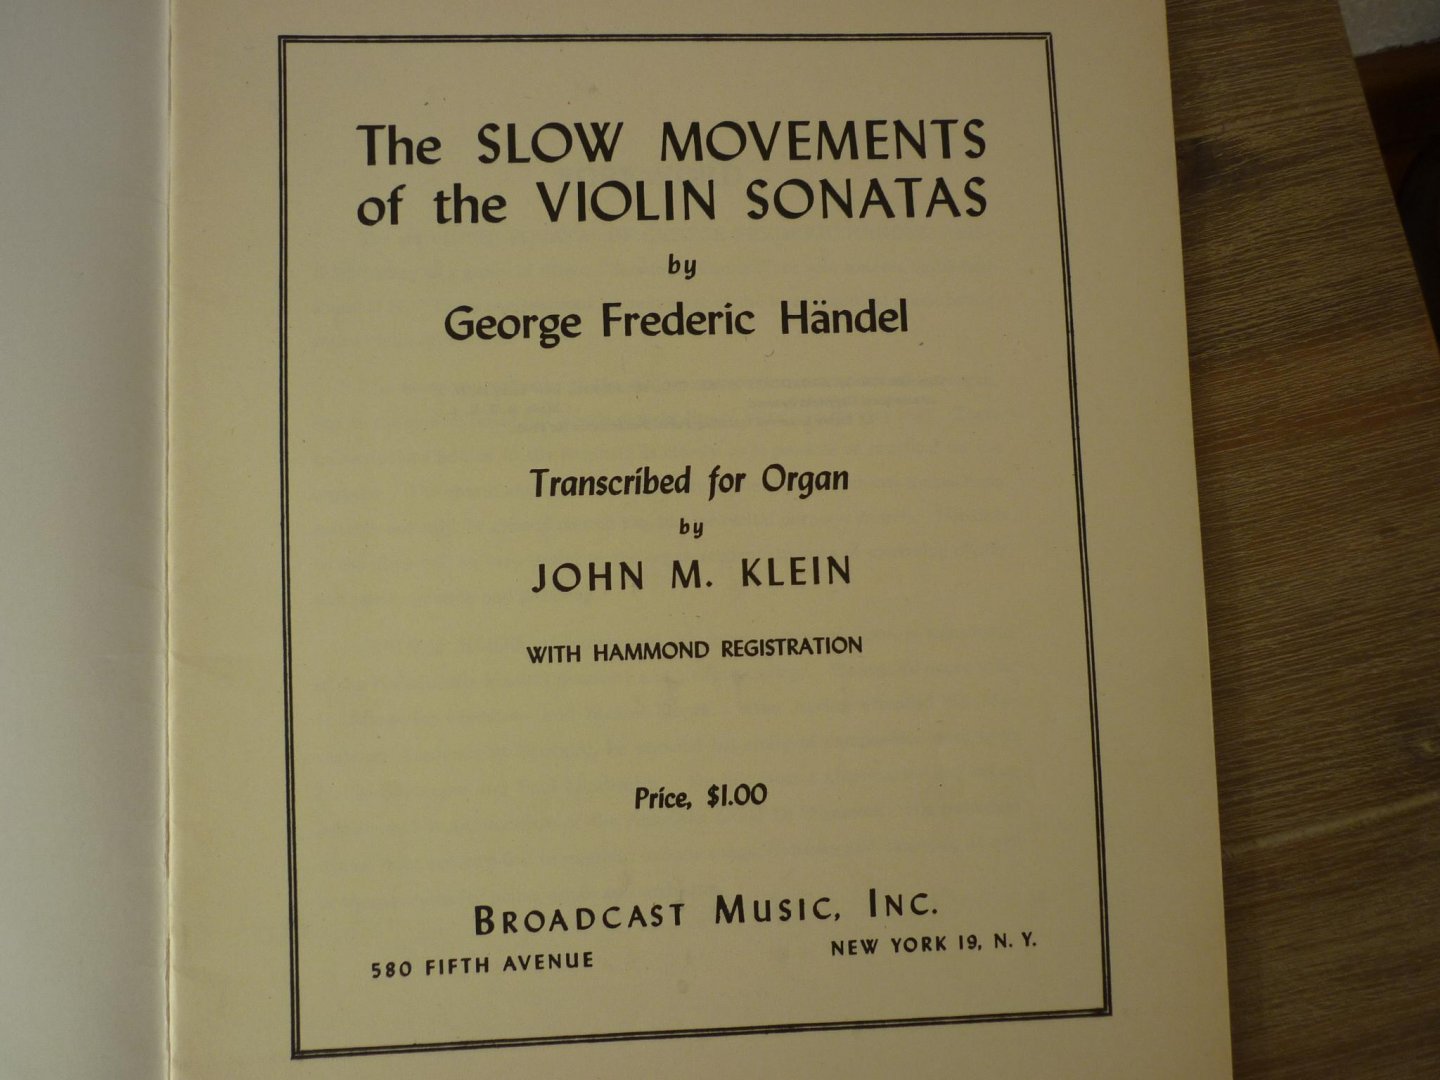 Handel; Georg Friedrich (1685-1759)  /  John M. Klein - The slow Movements of the Violin Sonatas by Georg Friedrich Handel (Transcribed for Organ by John M. Klein / Hammond Registration by Kenneth Walton